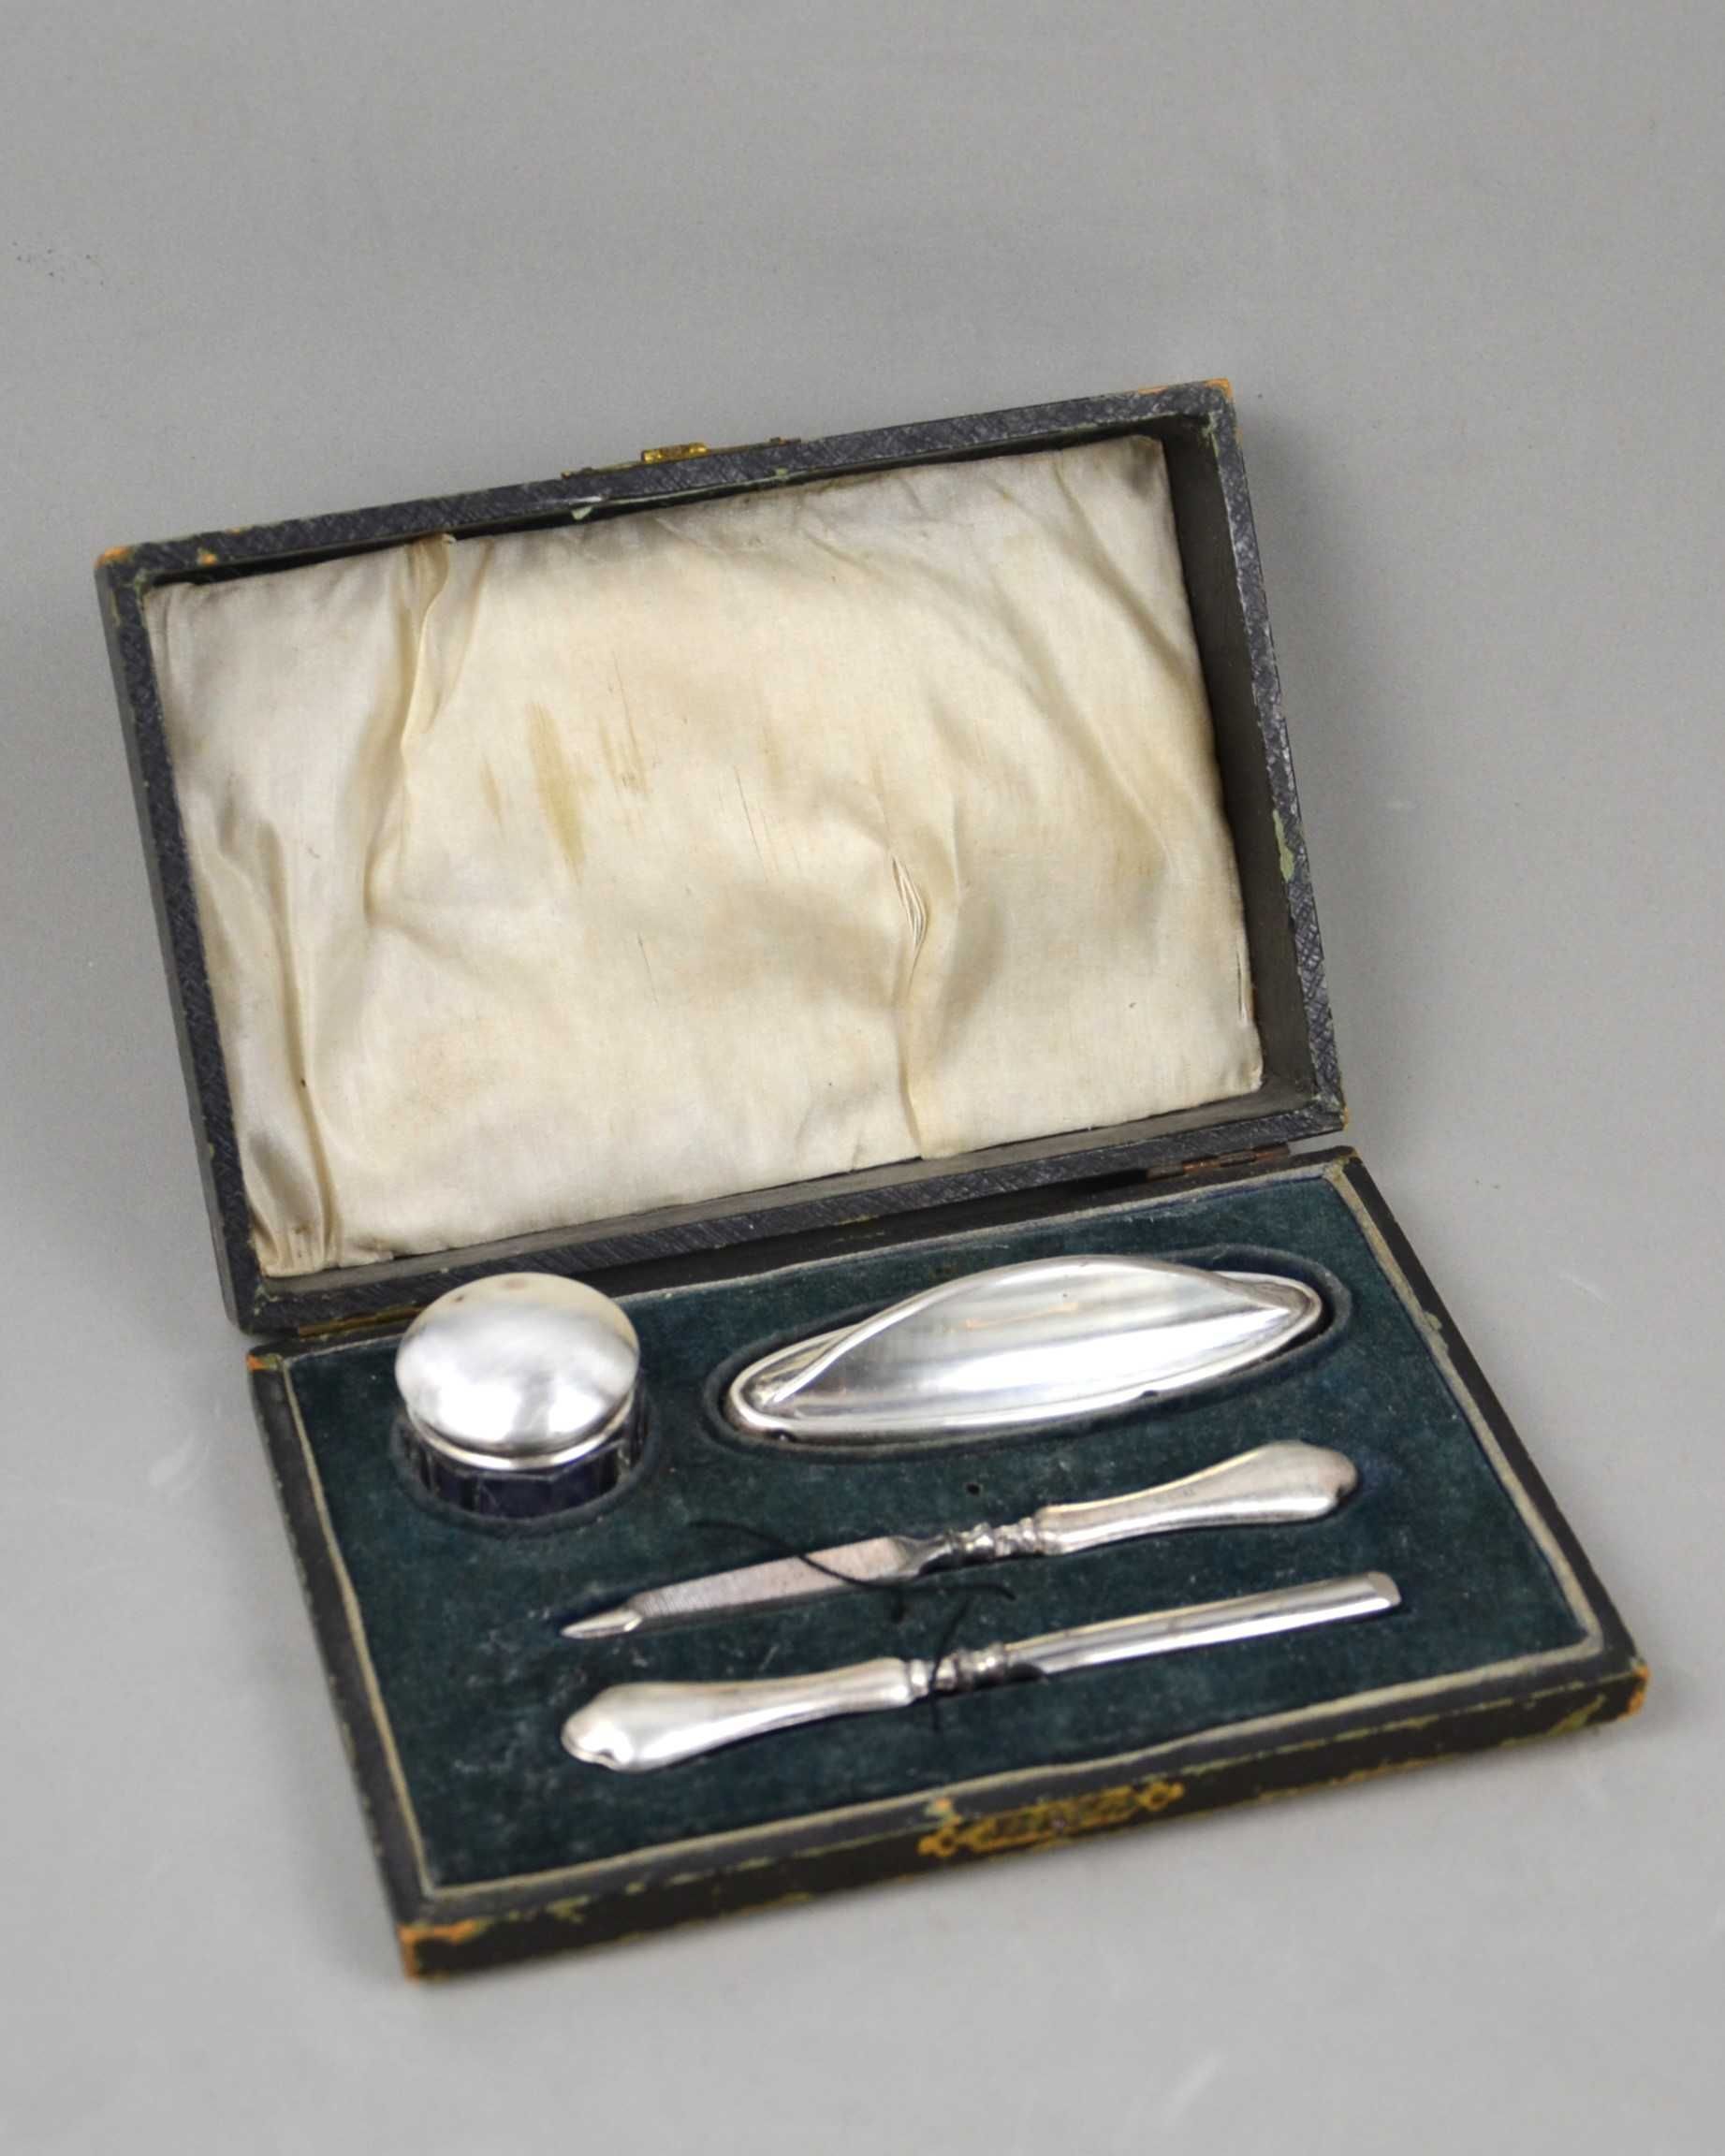 Zestaw do manicure art deco srebro Anglia Birmingham 1905r